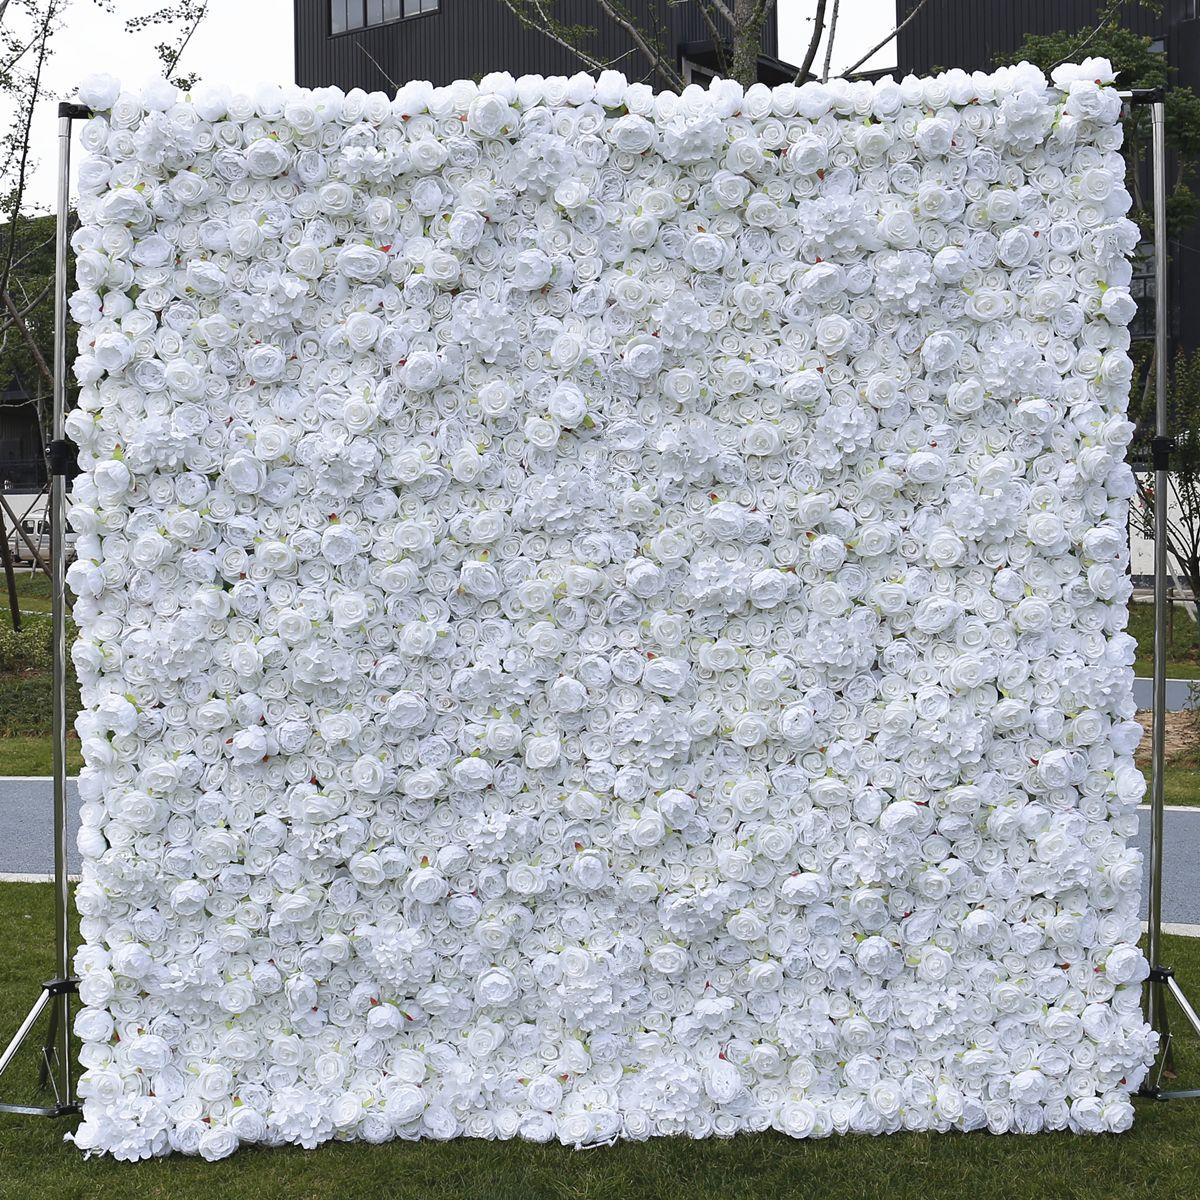 Pabrik penjualan langsung kain putih murni ing ngisor simulasi dekorasi pernikahan latar mburi tembok kembang